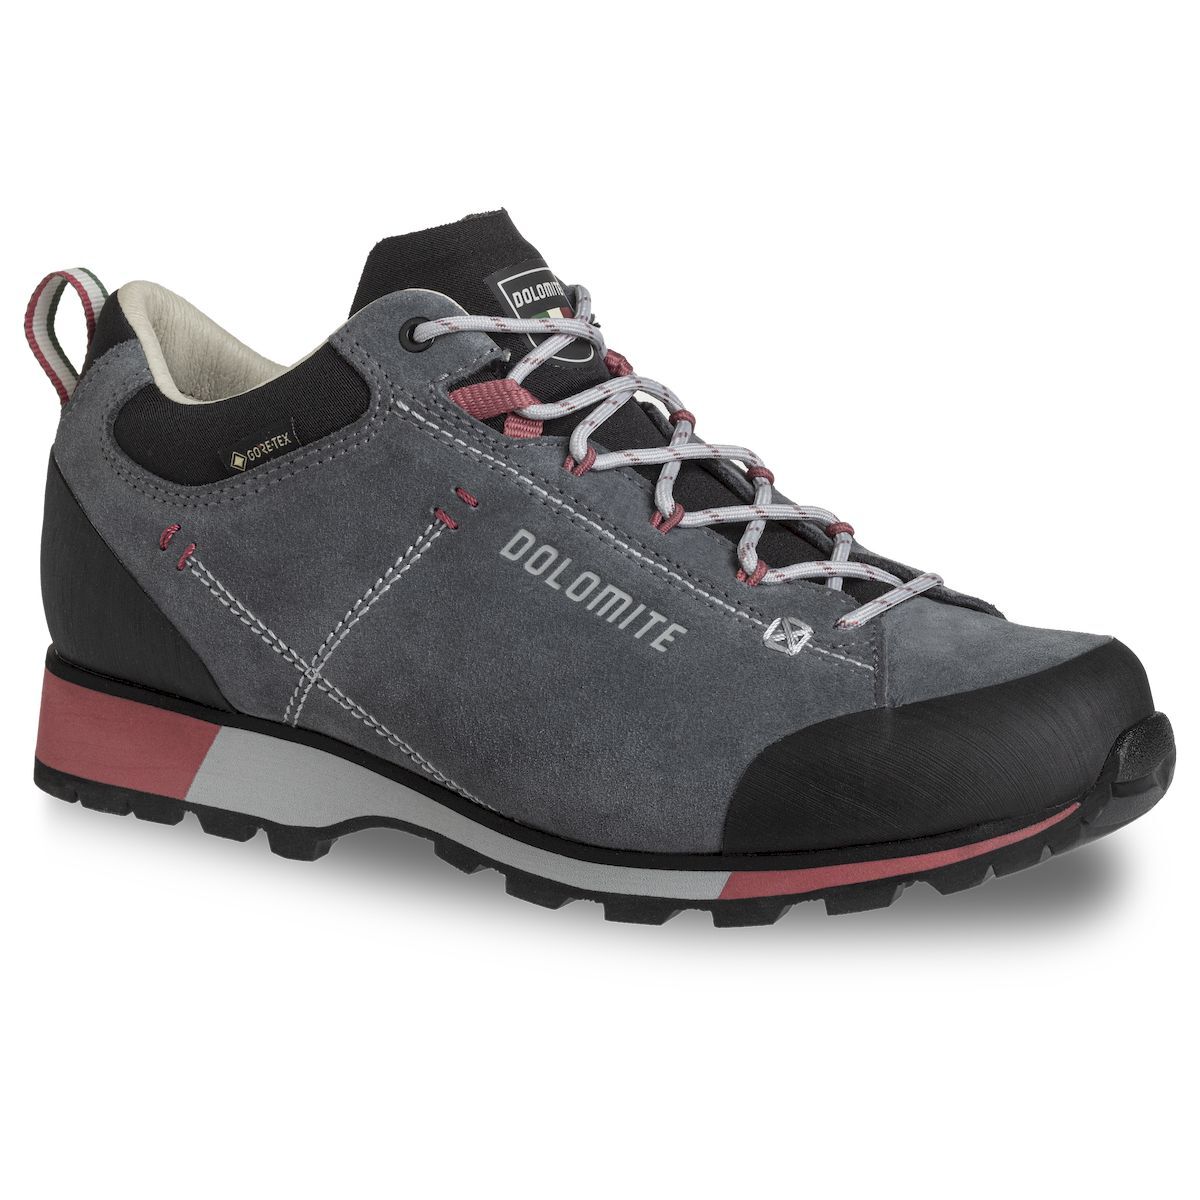 Dolomite 54 Hike Low EVO GTX - Hiking shoes - Women's